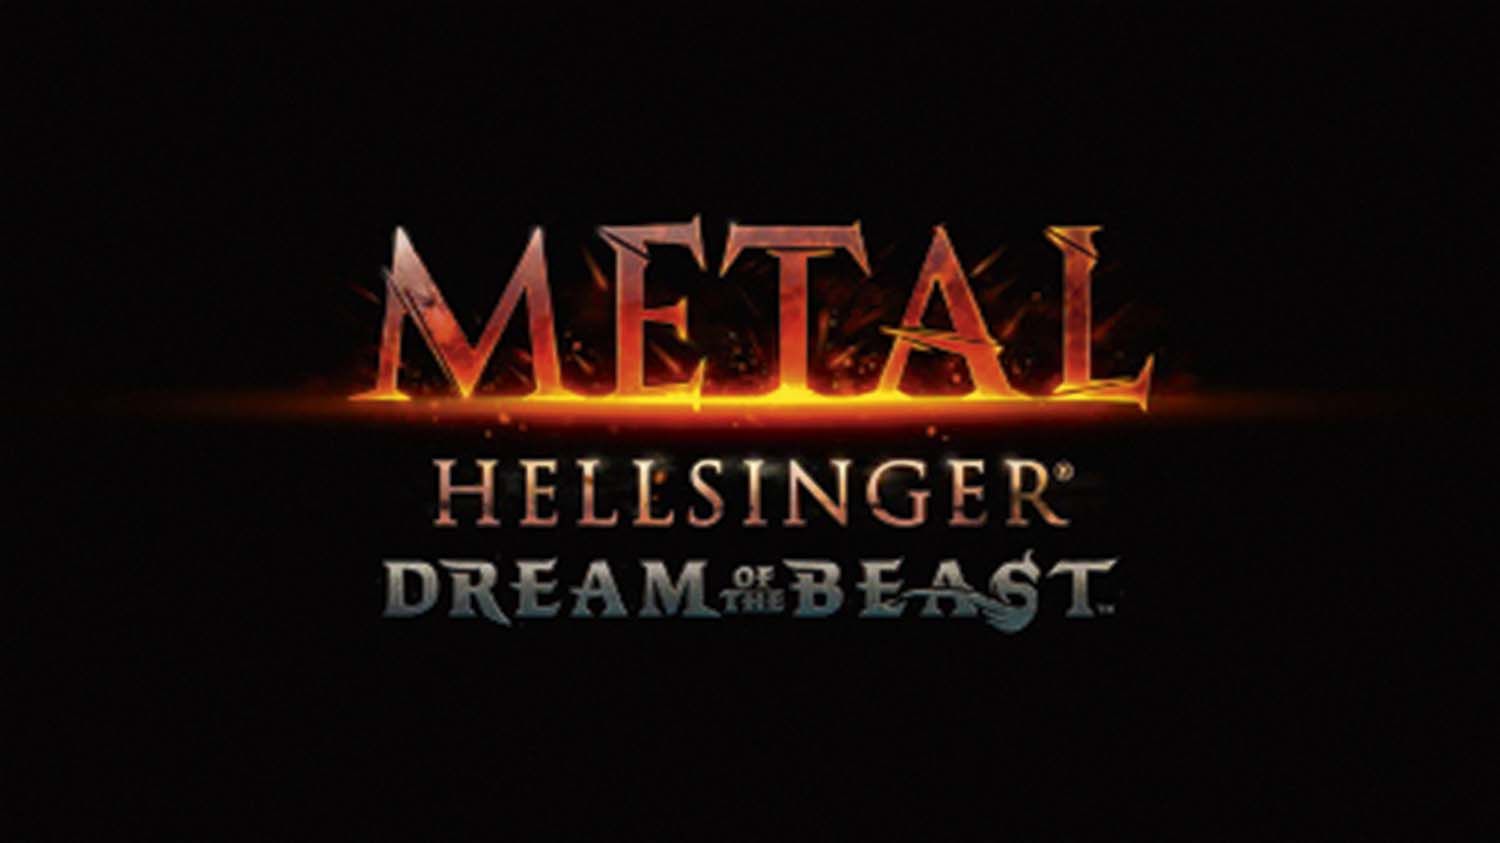 METAL: HELLSINGER – DREAM OF THE BEAST